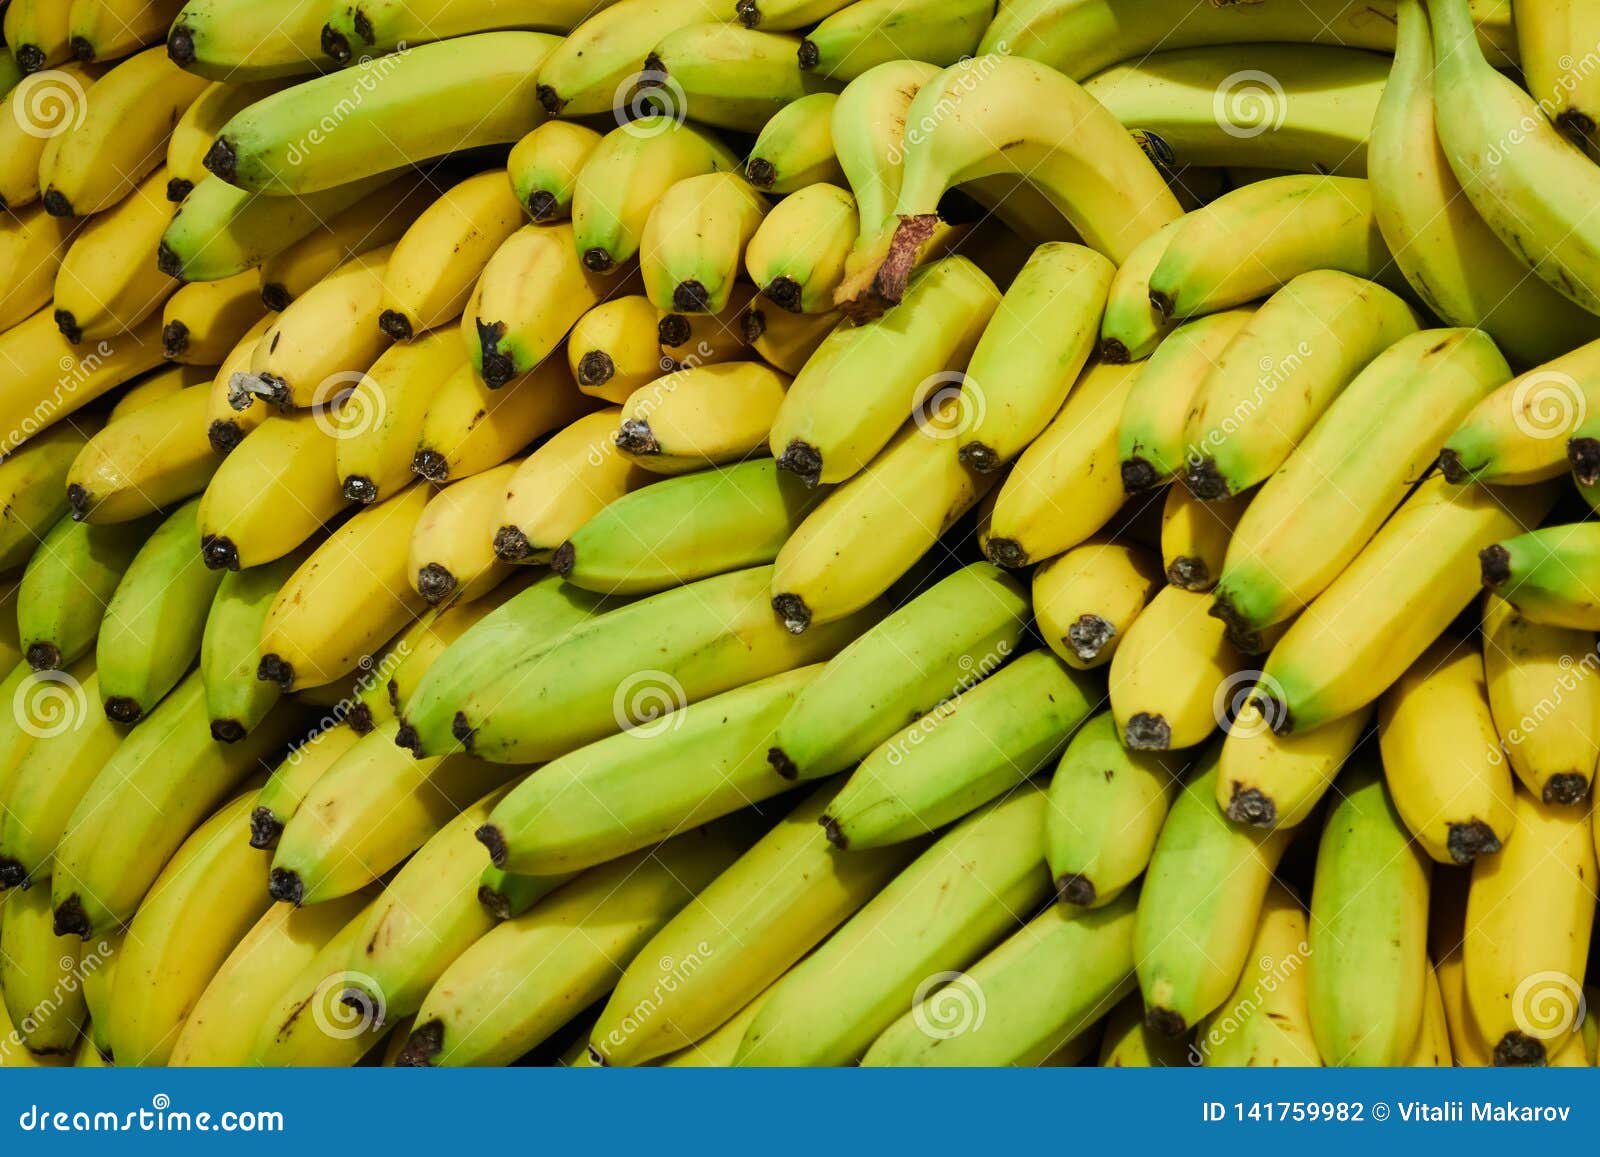 Включи big banana. Жёлтые бананы в ряд. Банан little big. Группа little big Bananas. Бананить.